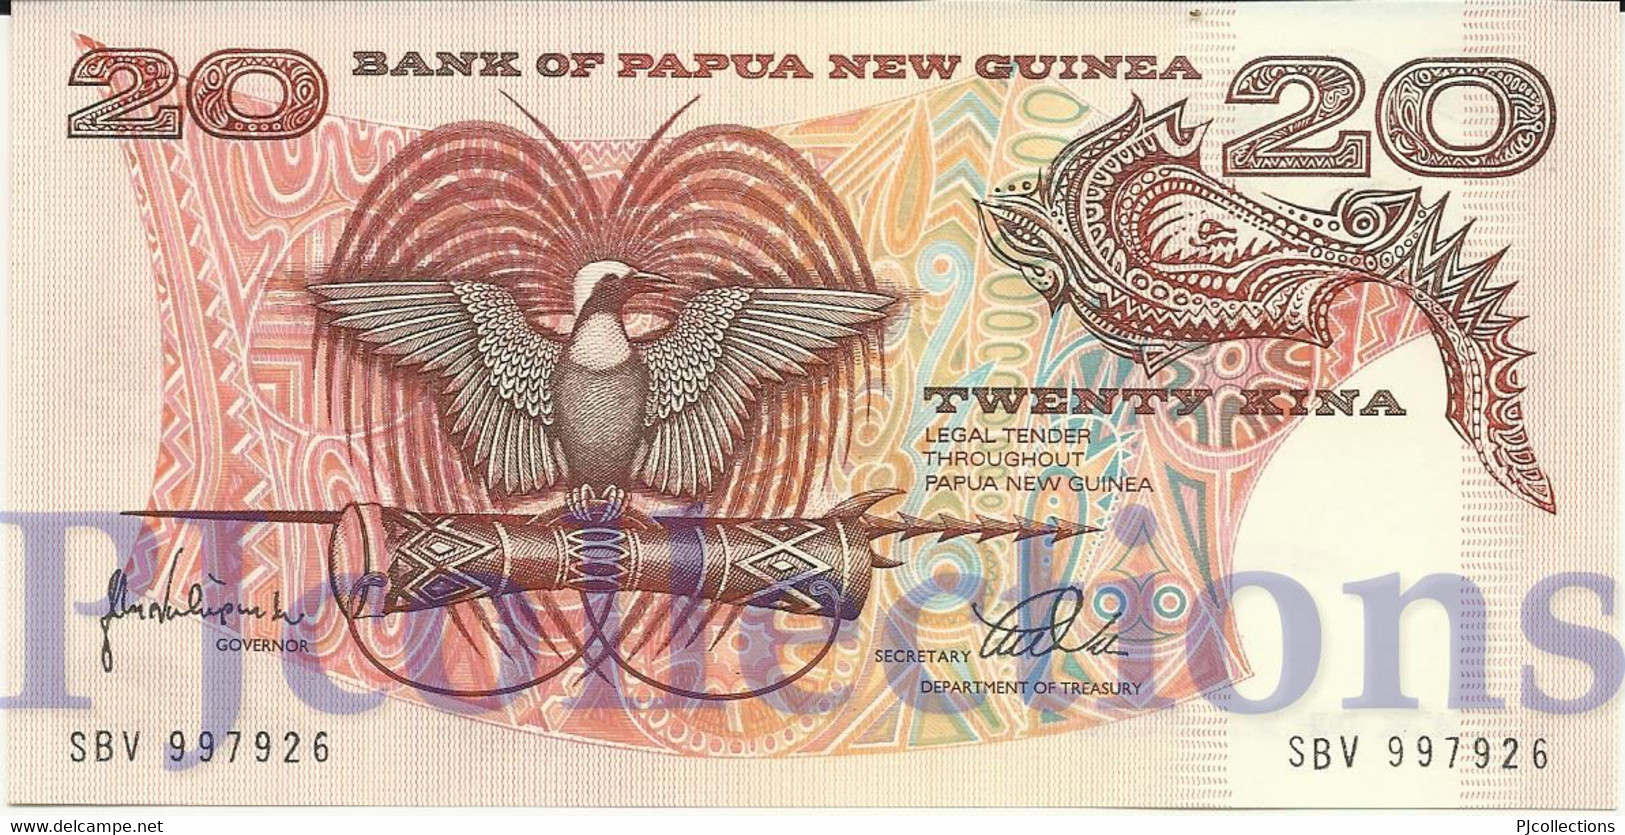 PAPUA NEW GUINEA 20 KINA 1989/2001 PICK 10c UNC - Papua New Guinea